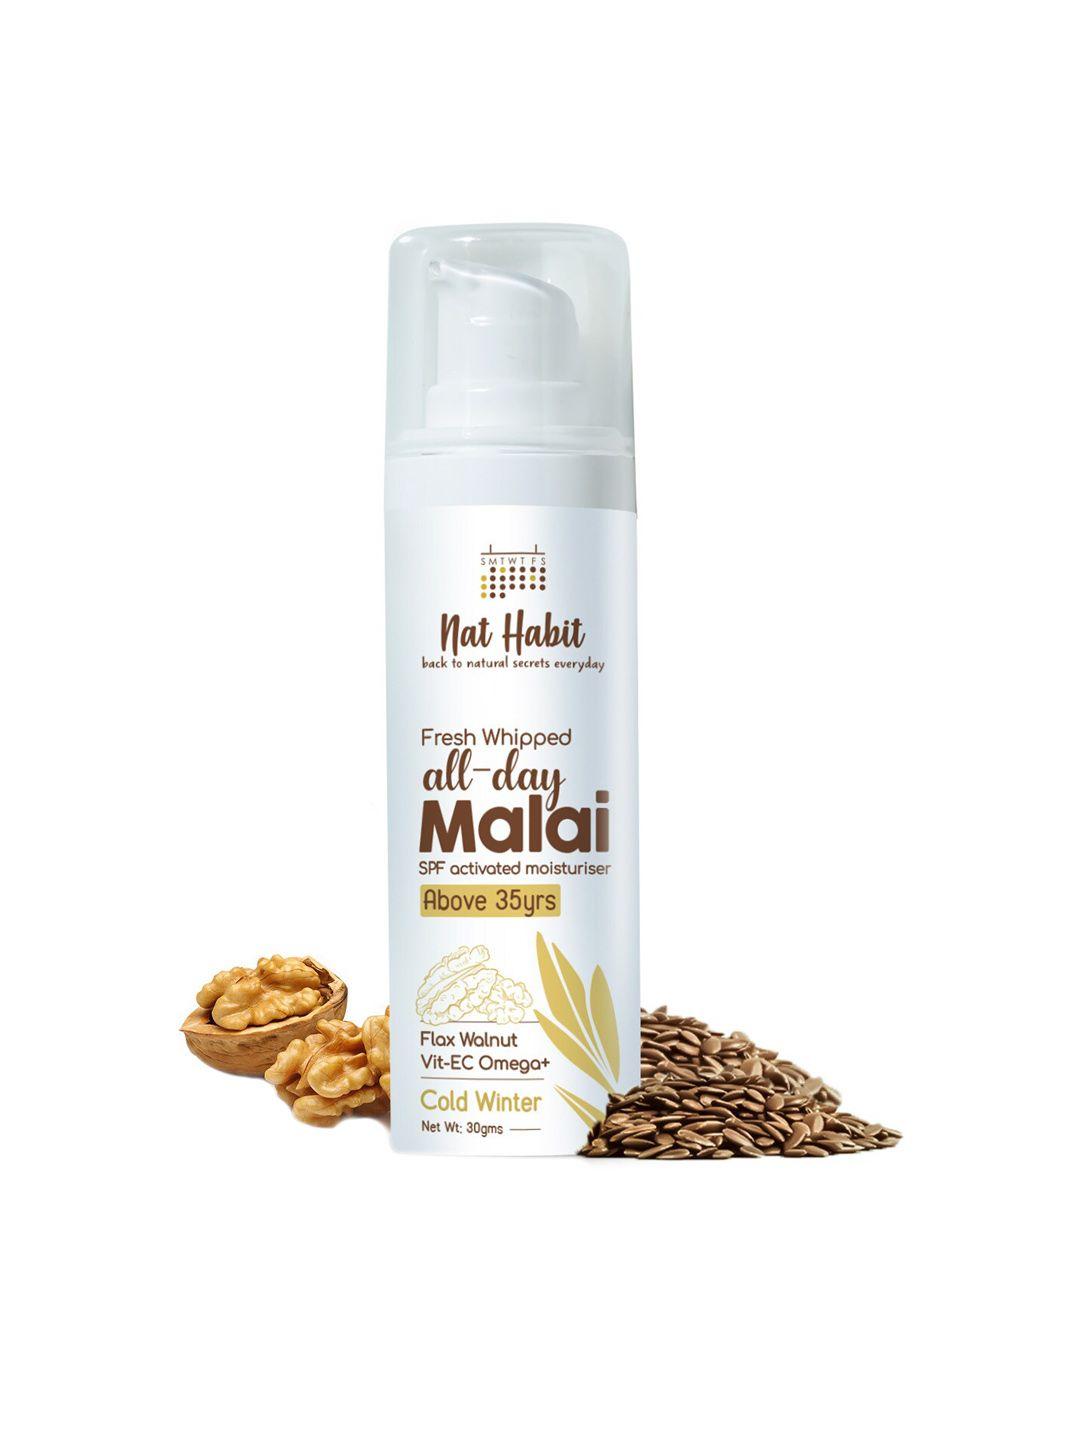 nat habit fresh whipped all day malai moisturizer with flax walnut vit-ec omega - 30 g